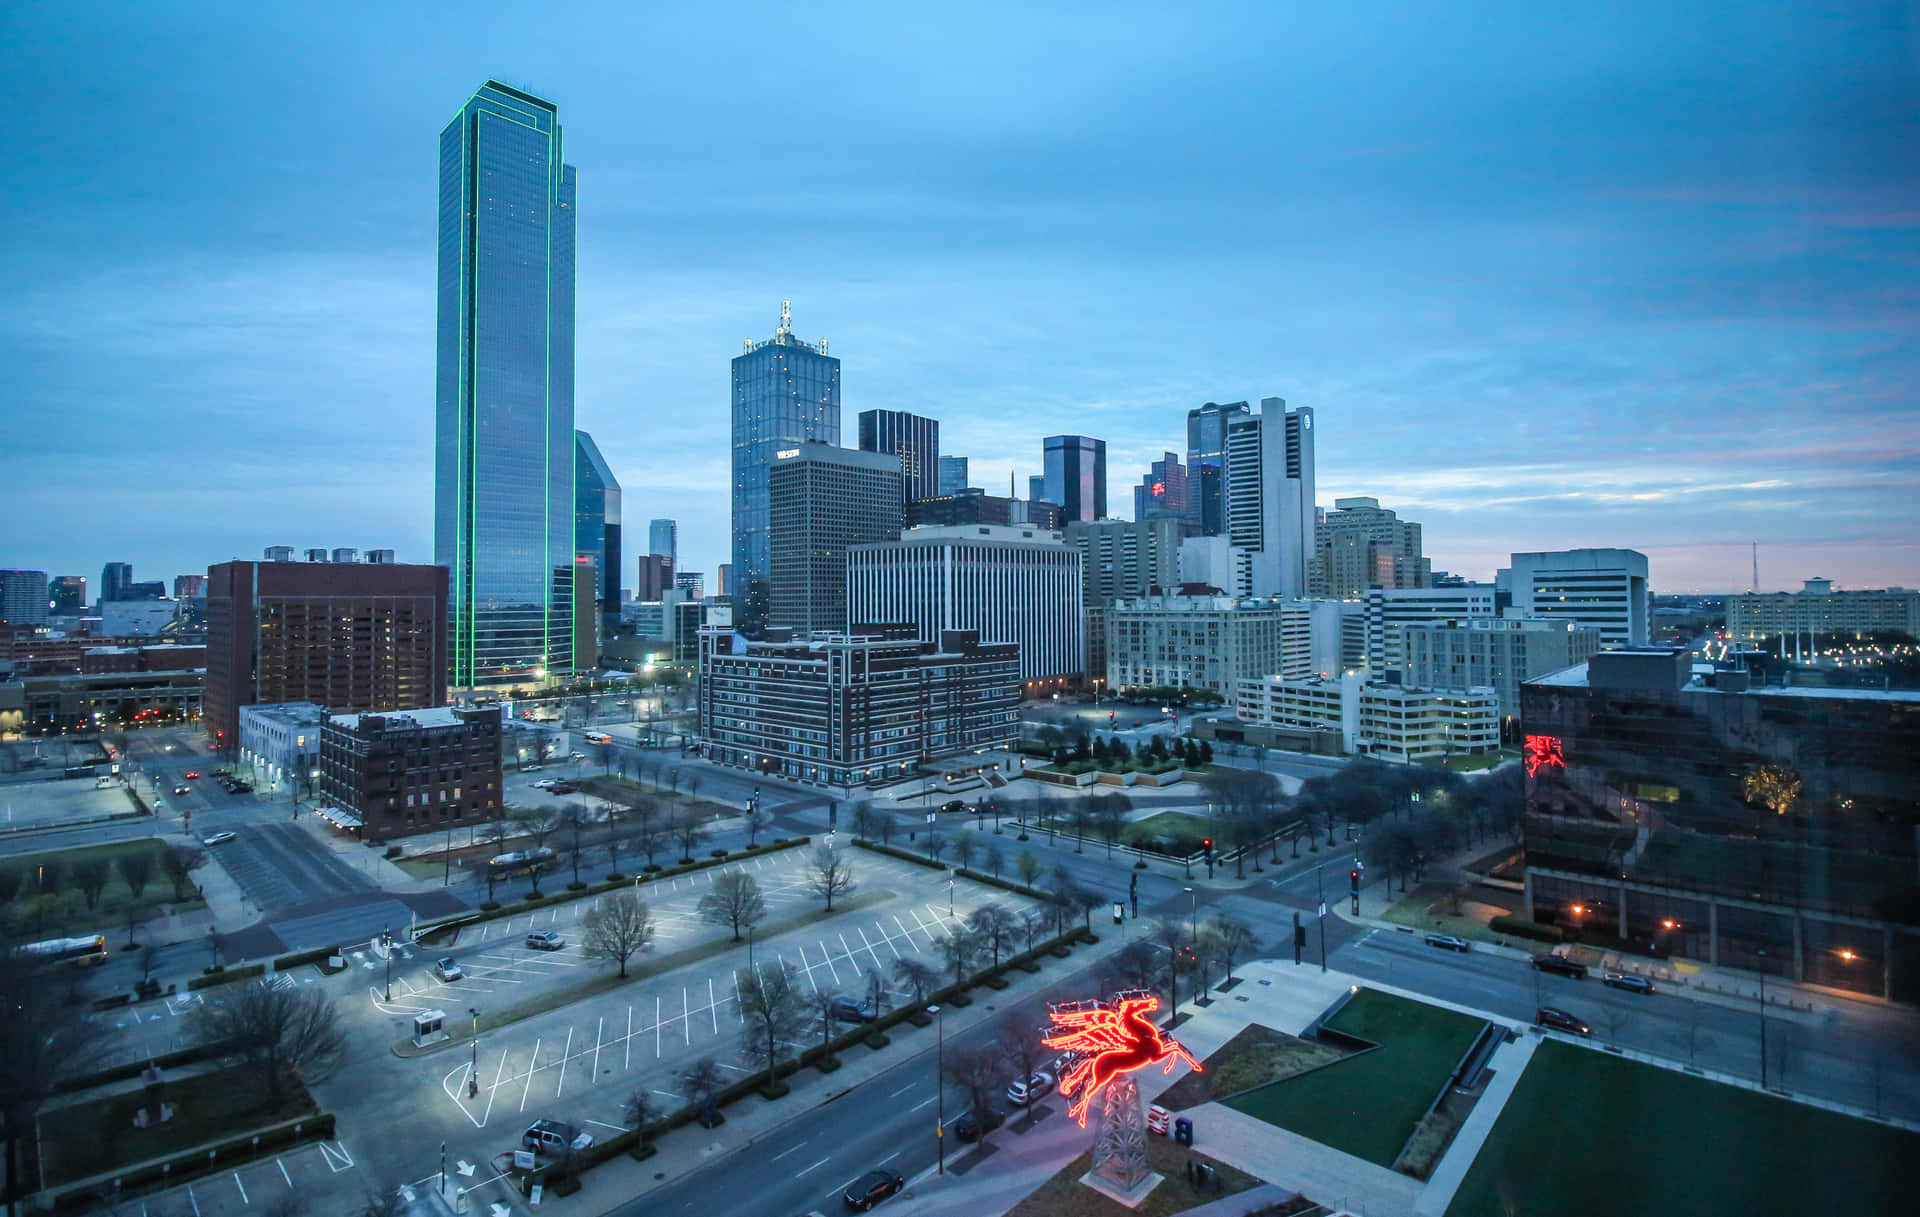 The Skyline Of Dallas, Texas